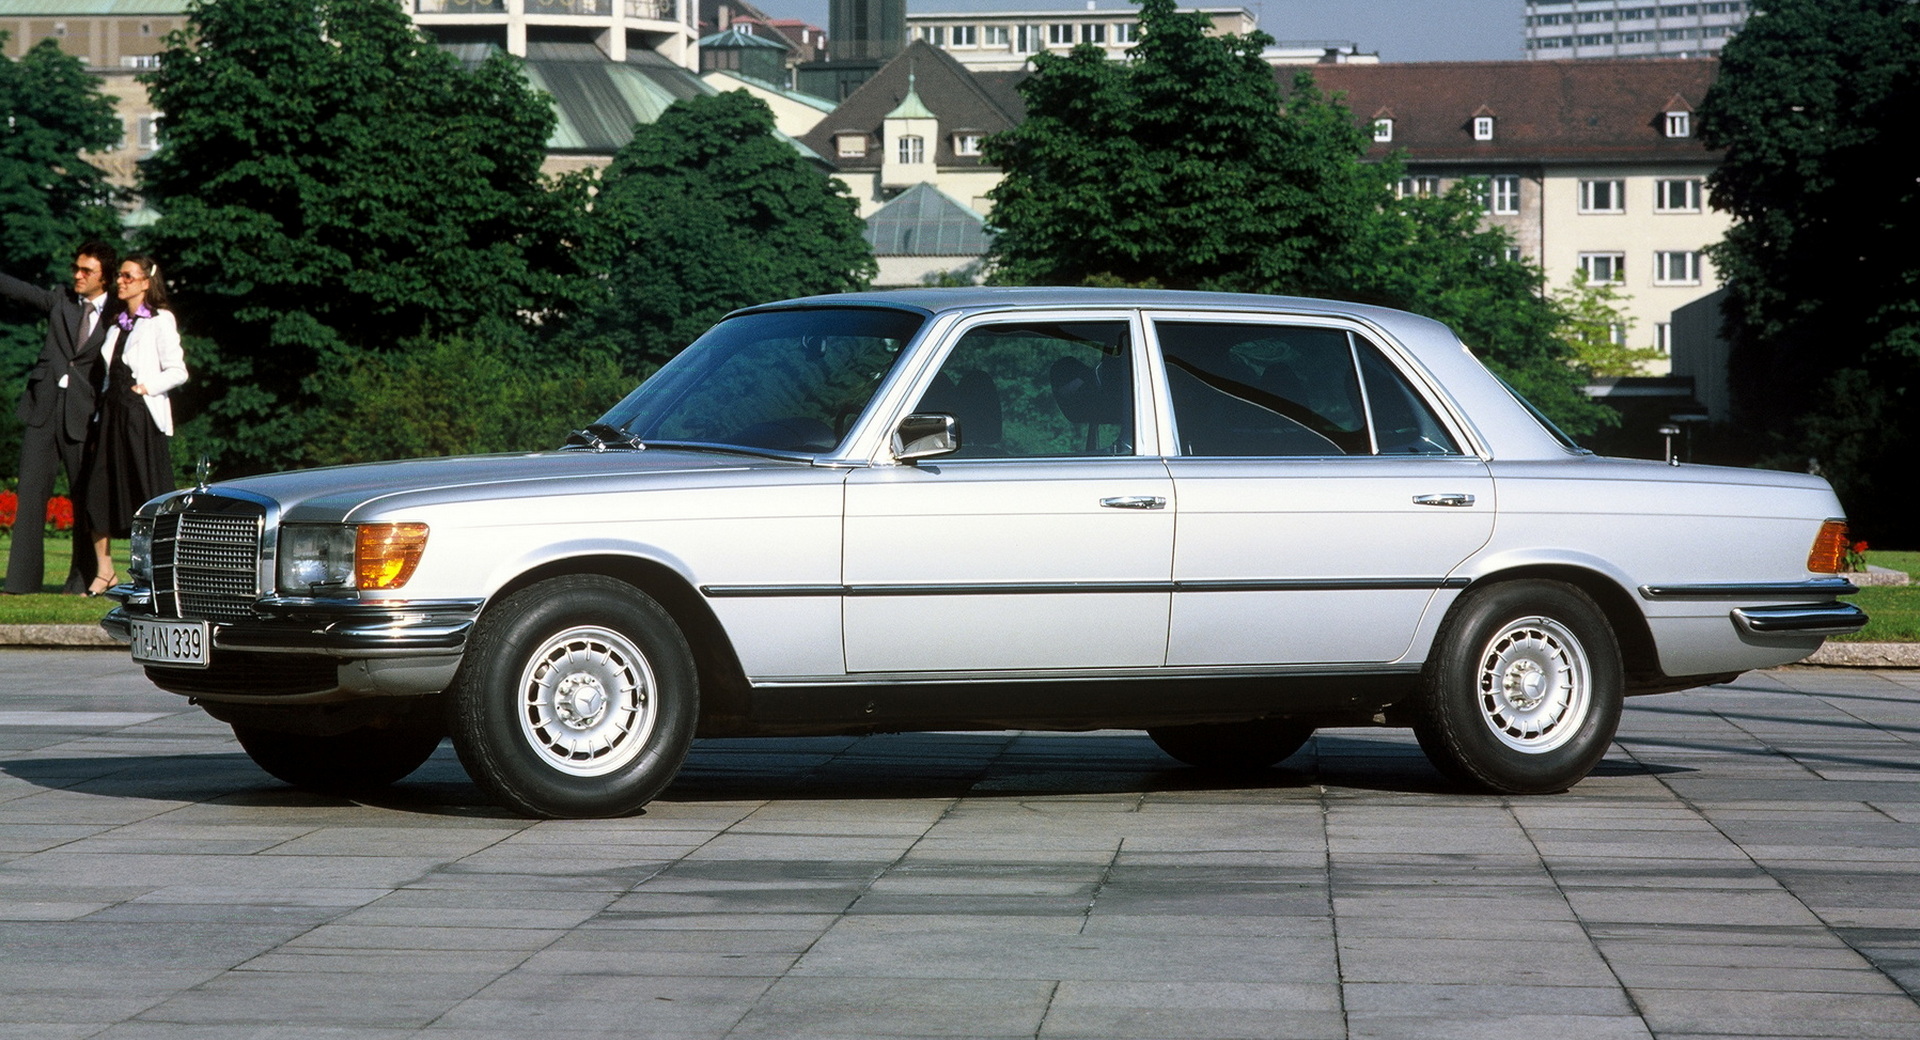 https://www.carscoops.com/wp-content/uploads/2021/09/1975-Mercedes-450-SEL-.jpg